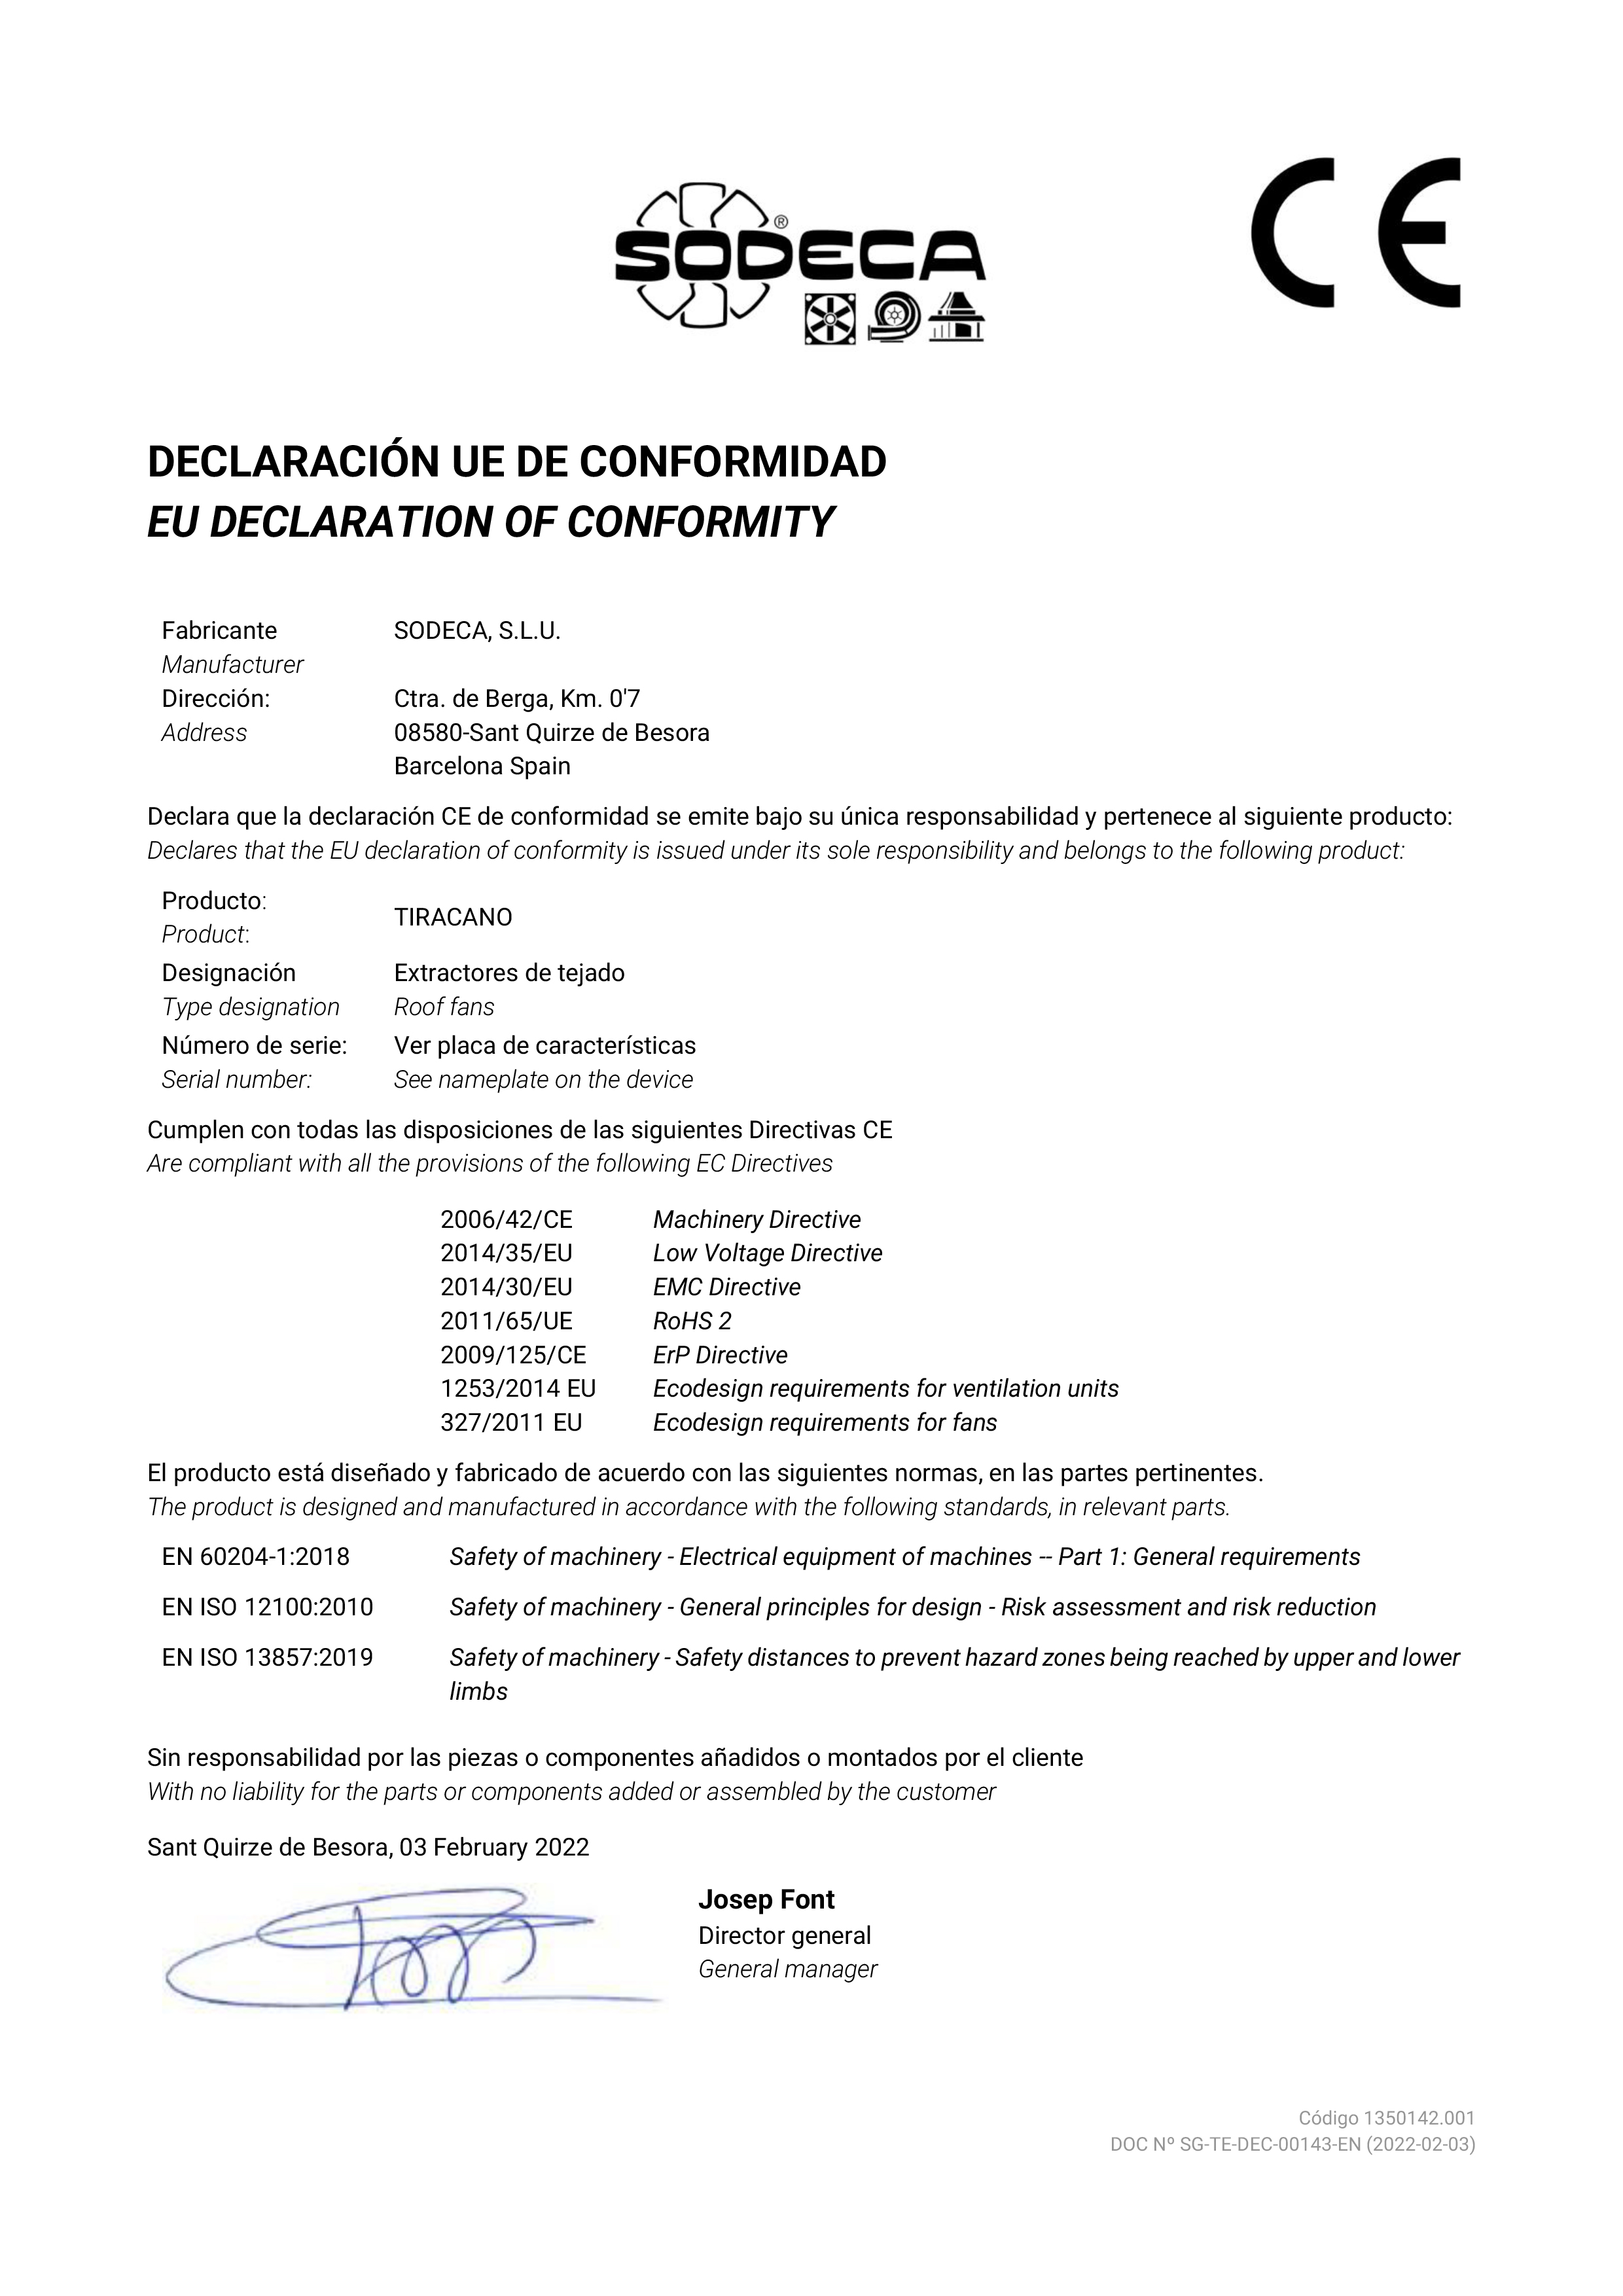 DECLARATION of CONFORMITY "TIRACANO"